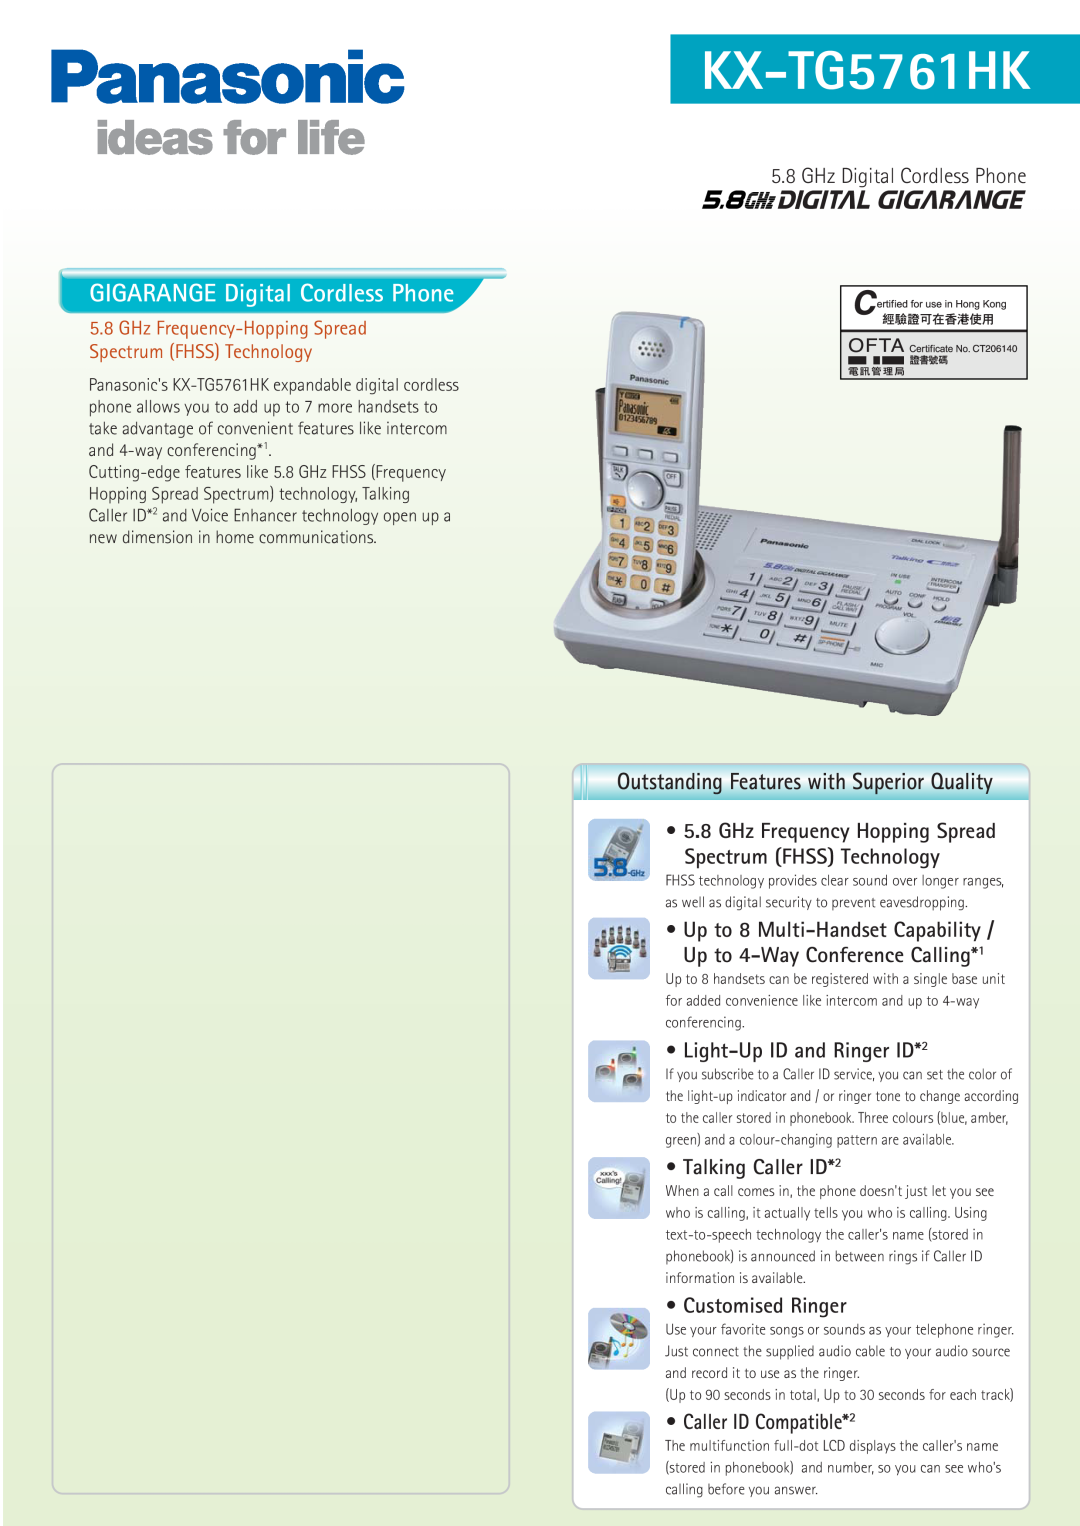 Panasonic KX-TG5761HK manual GIGARANGE Digital Cordless Phone, GHz Digital Cordless Phone, Light-Up ID and Ringer ID*2 